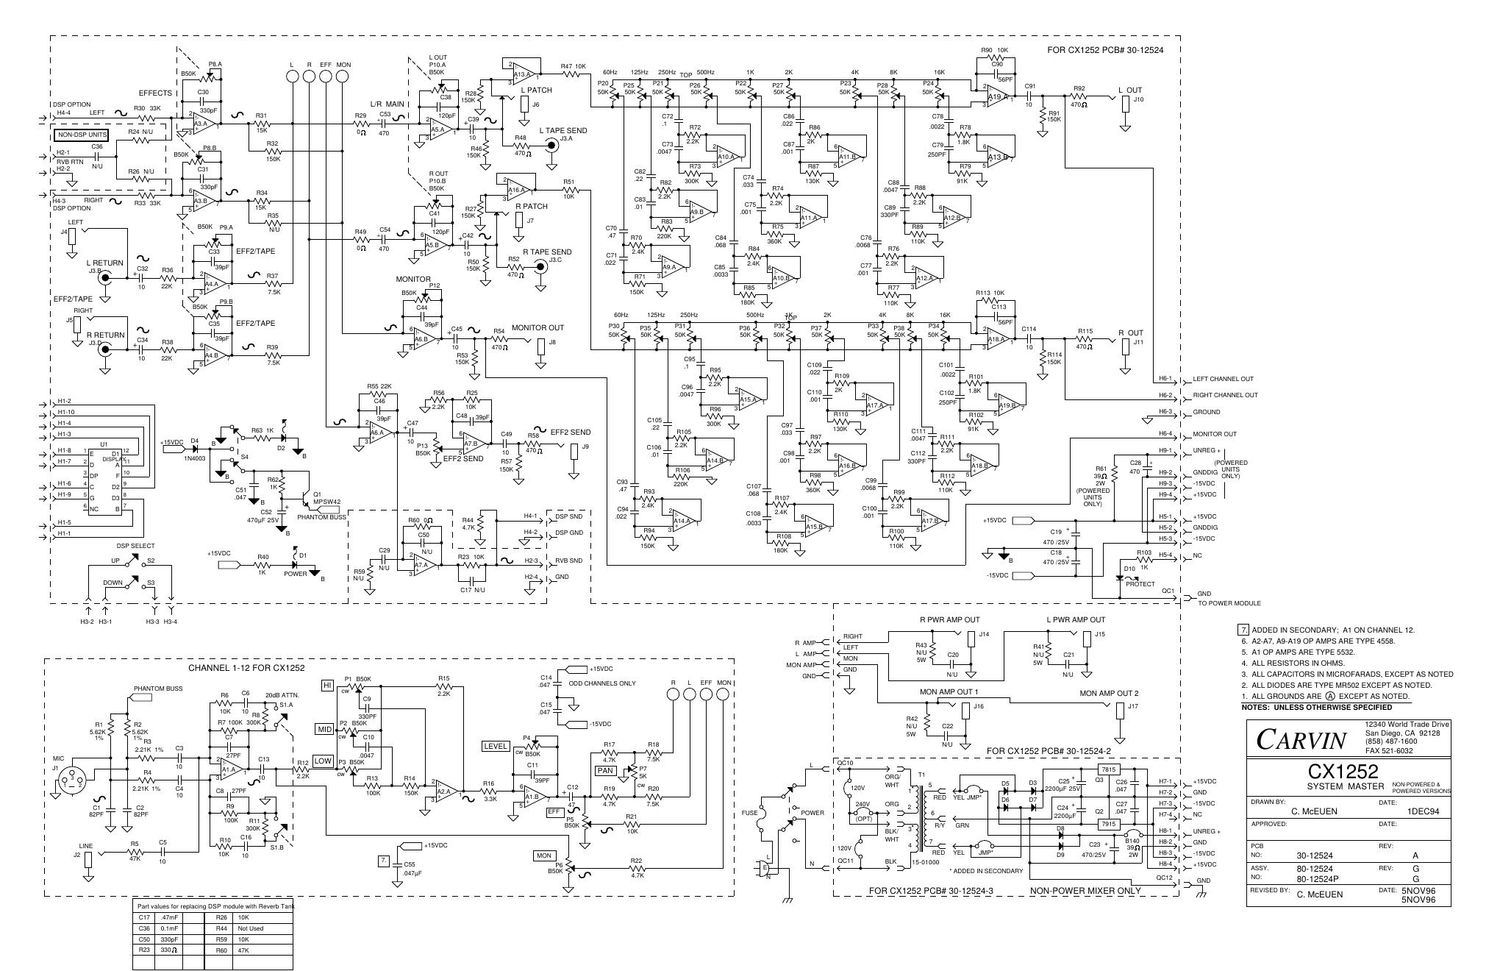 carvin cx 1252 mixer schematic